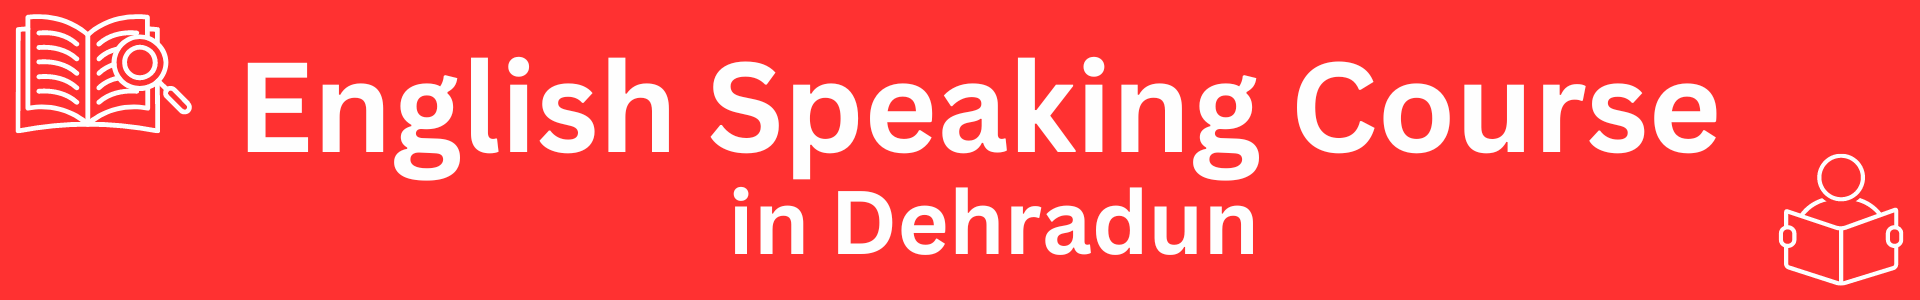 English Speaking Course in Dehradun